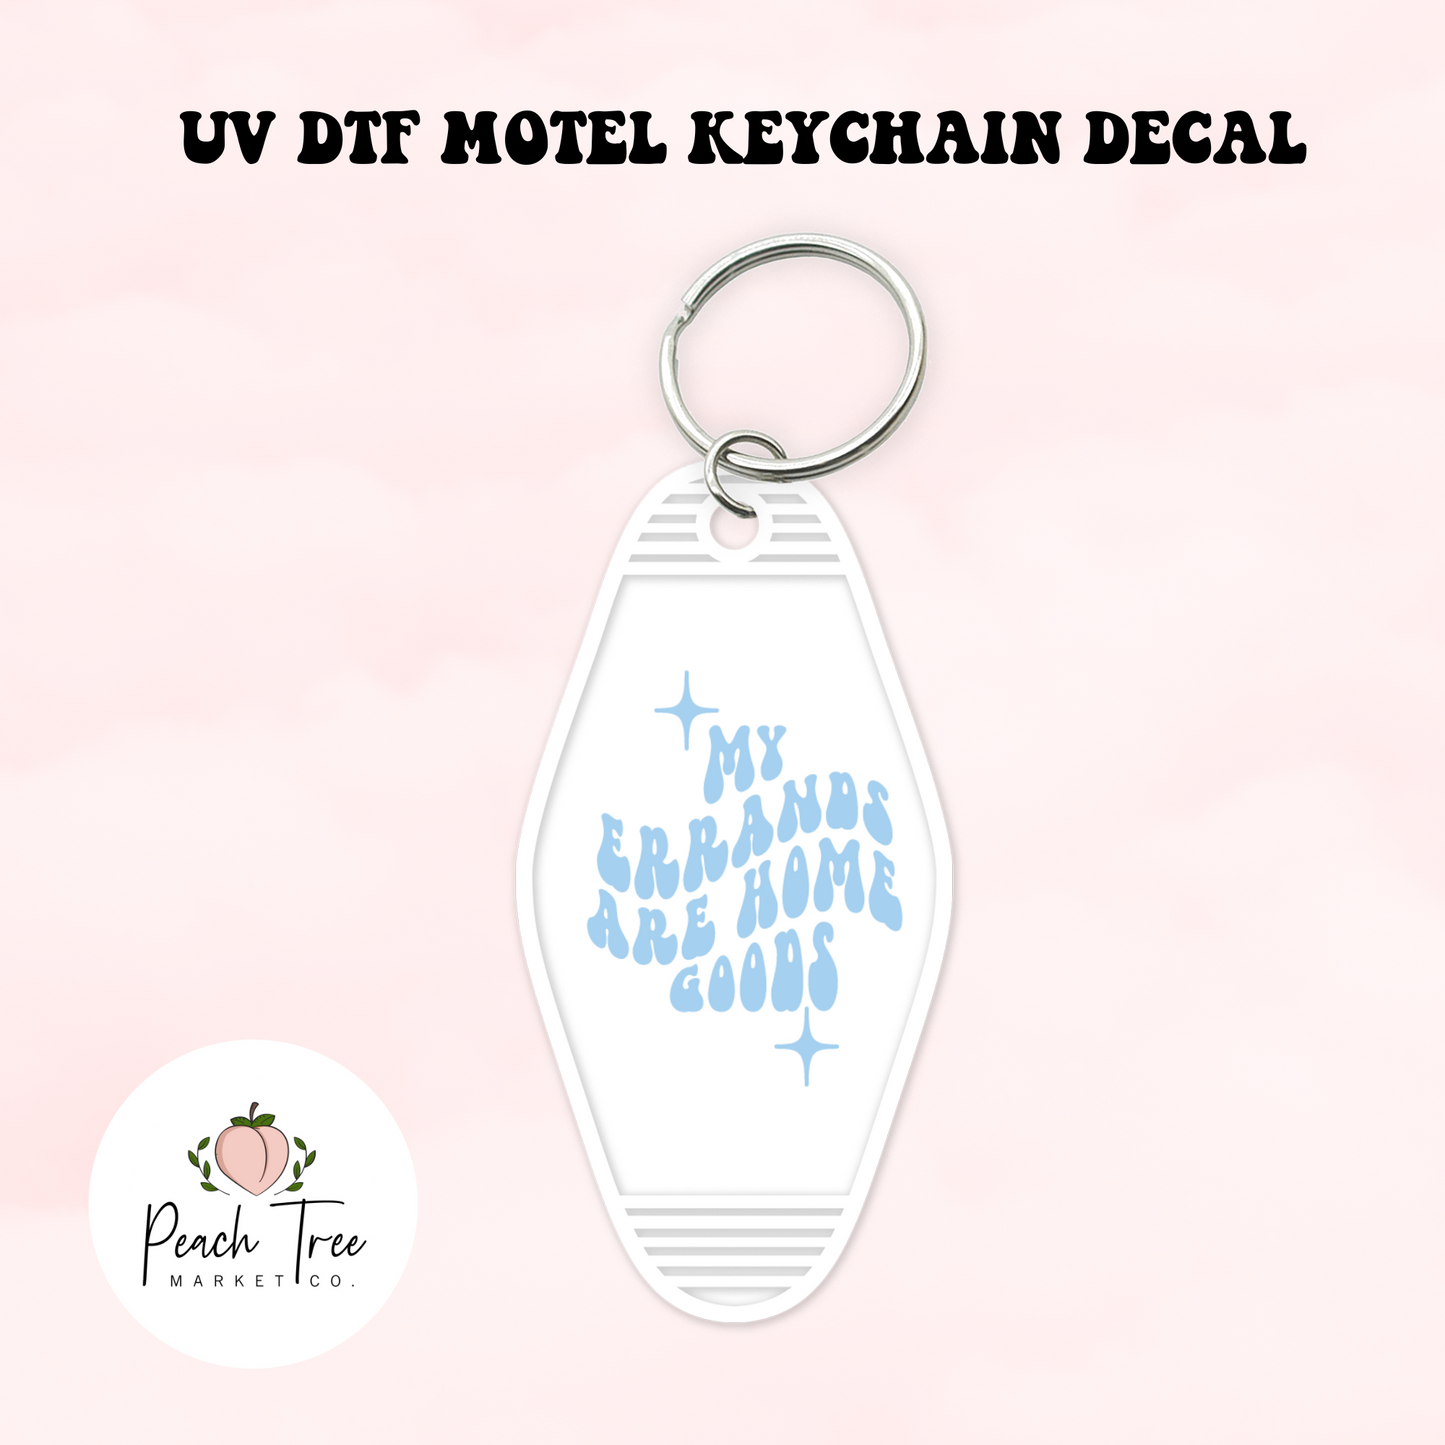 My Errands UV DTF Motel Keychain Decal